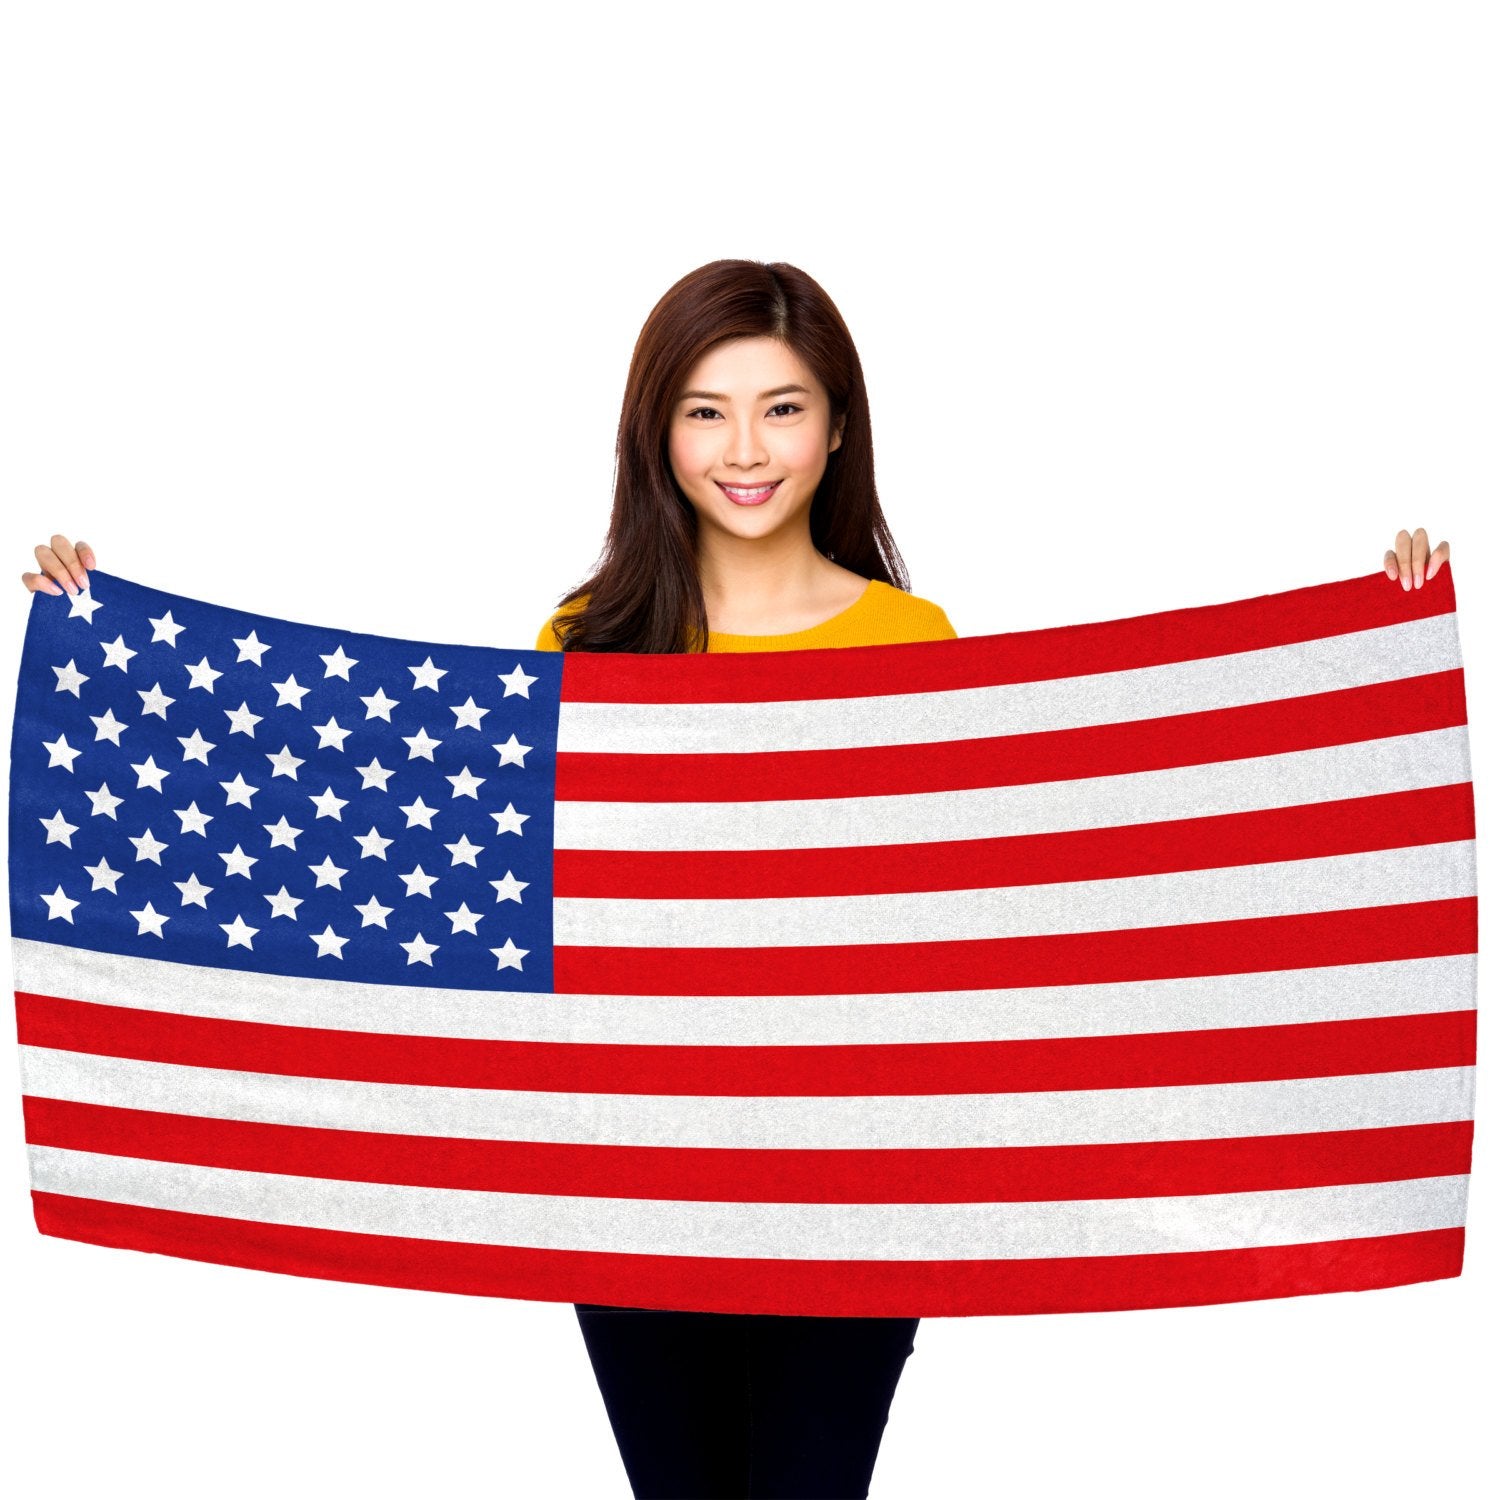 USA Flag 30" x 60" Microfiber Beach Towel